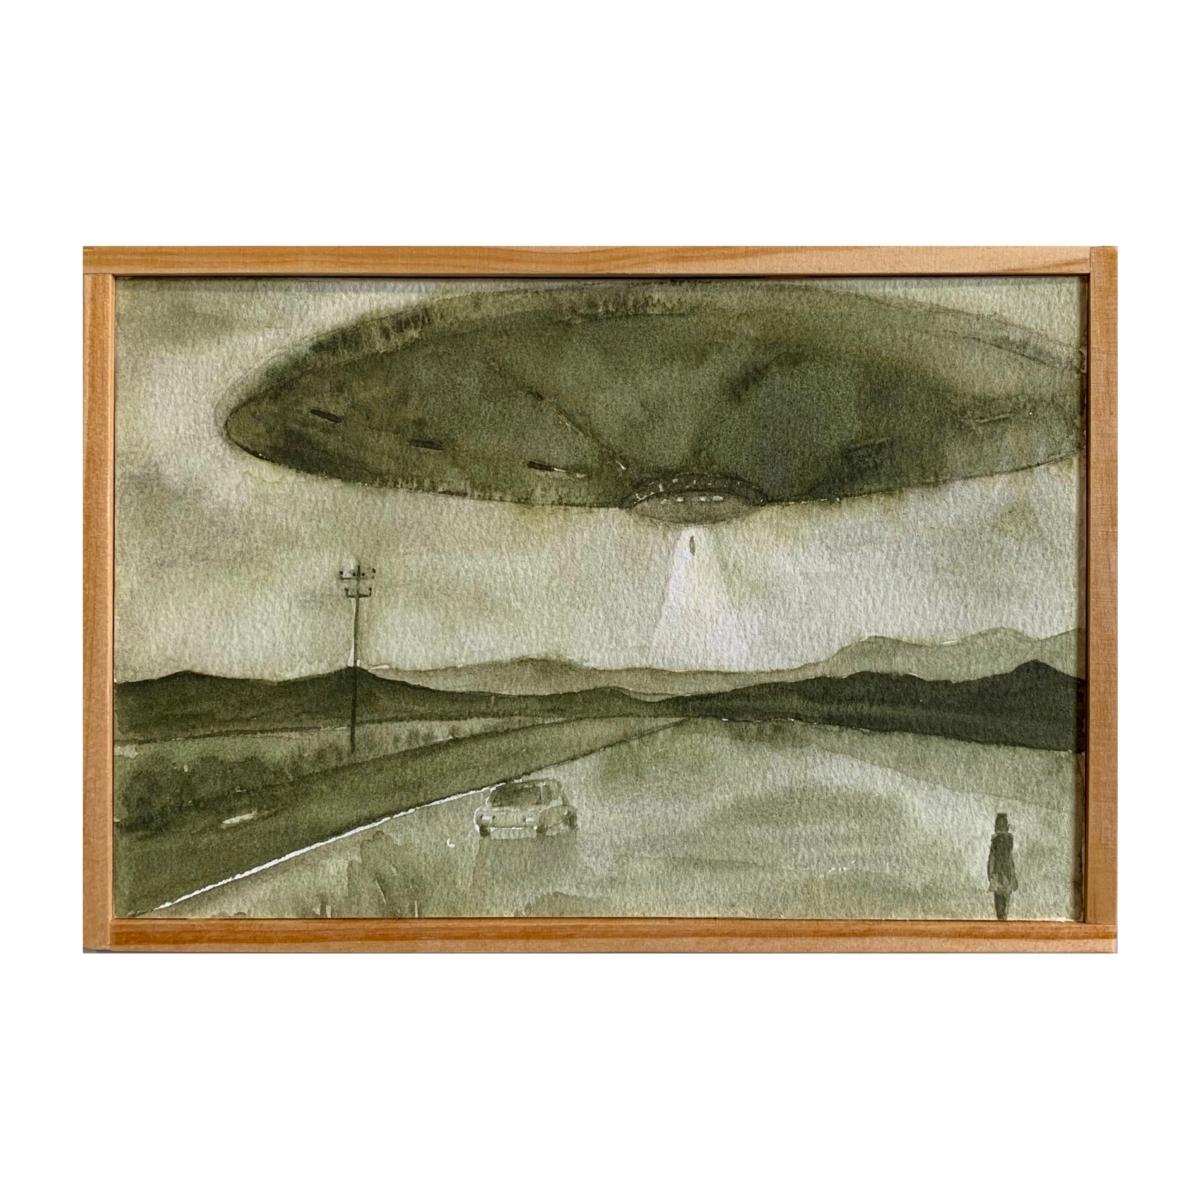 Jia Liu Landscape Art - Encounter: UFO Series No. 3 - monochrome watercolor on paper